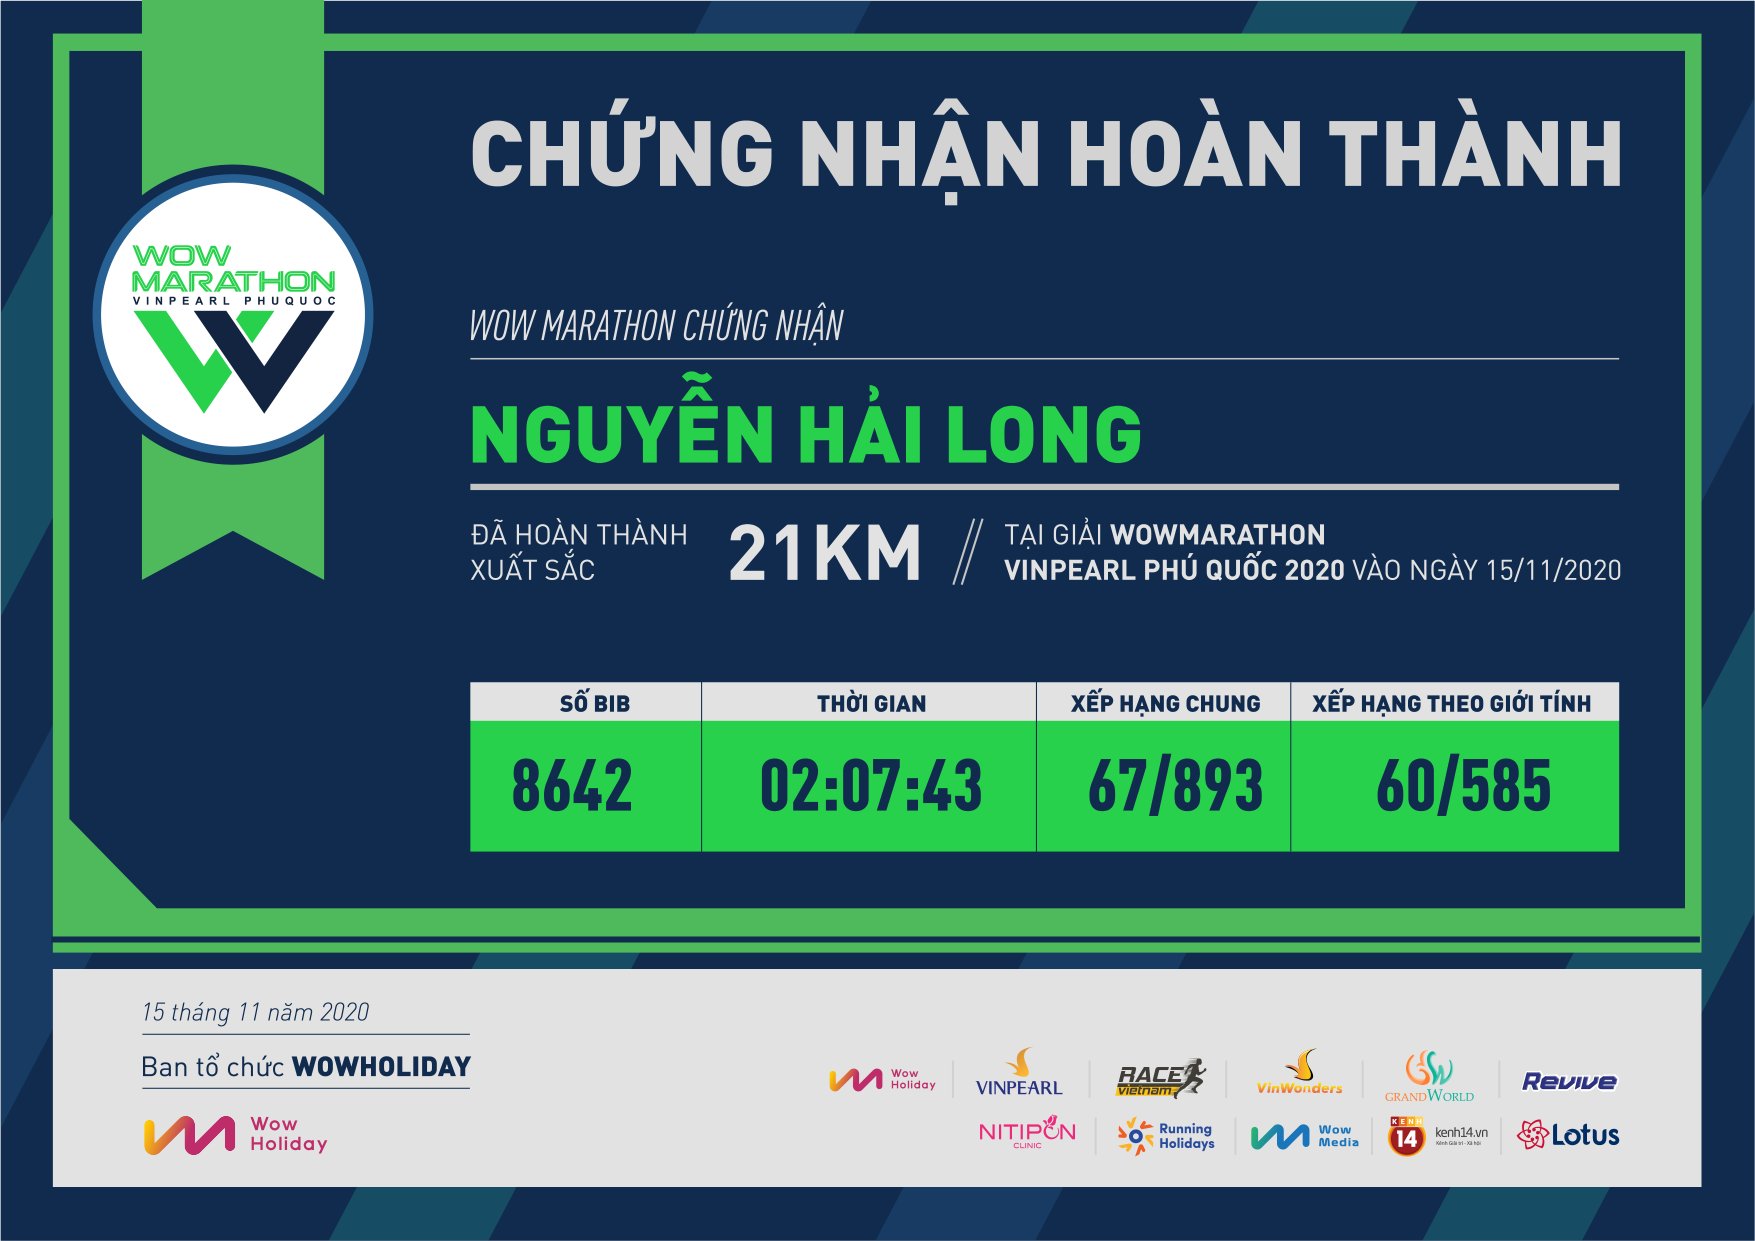 8642 - Nguyễn Hải Long